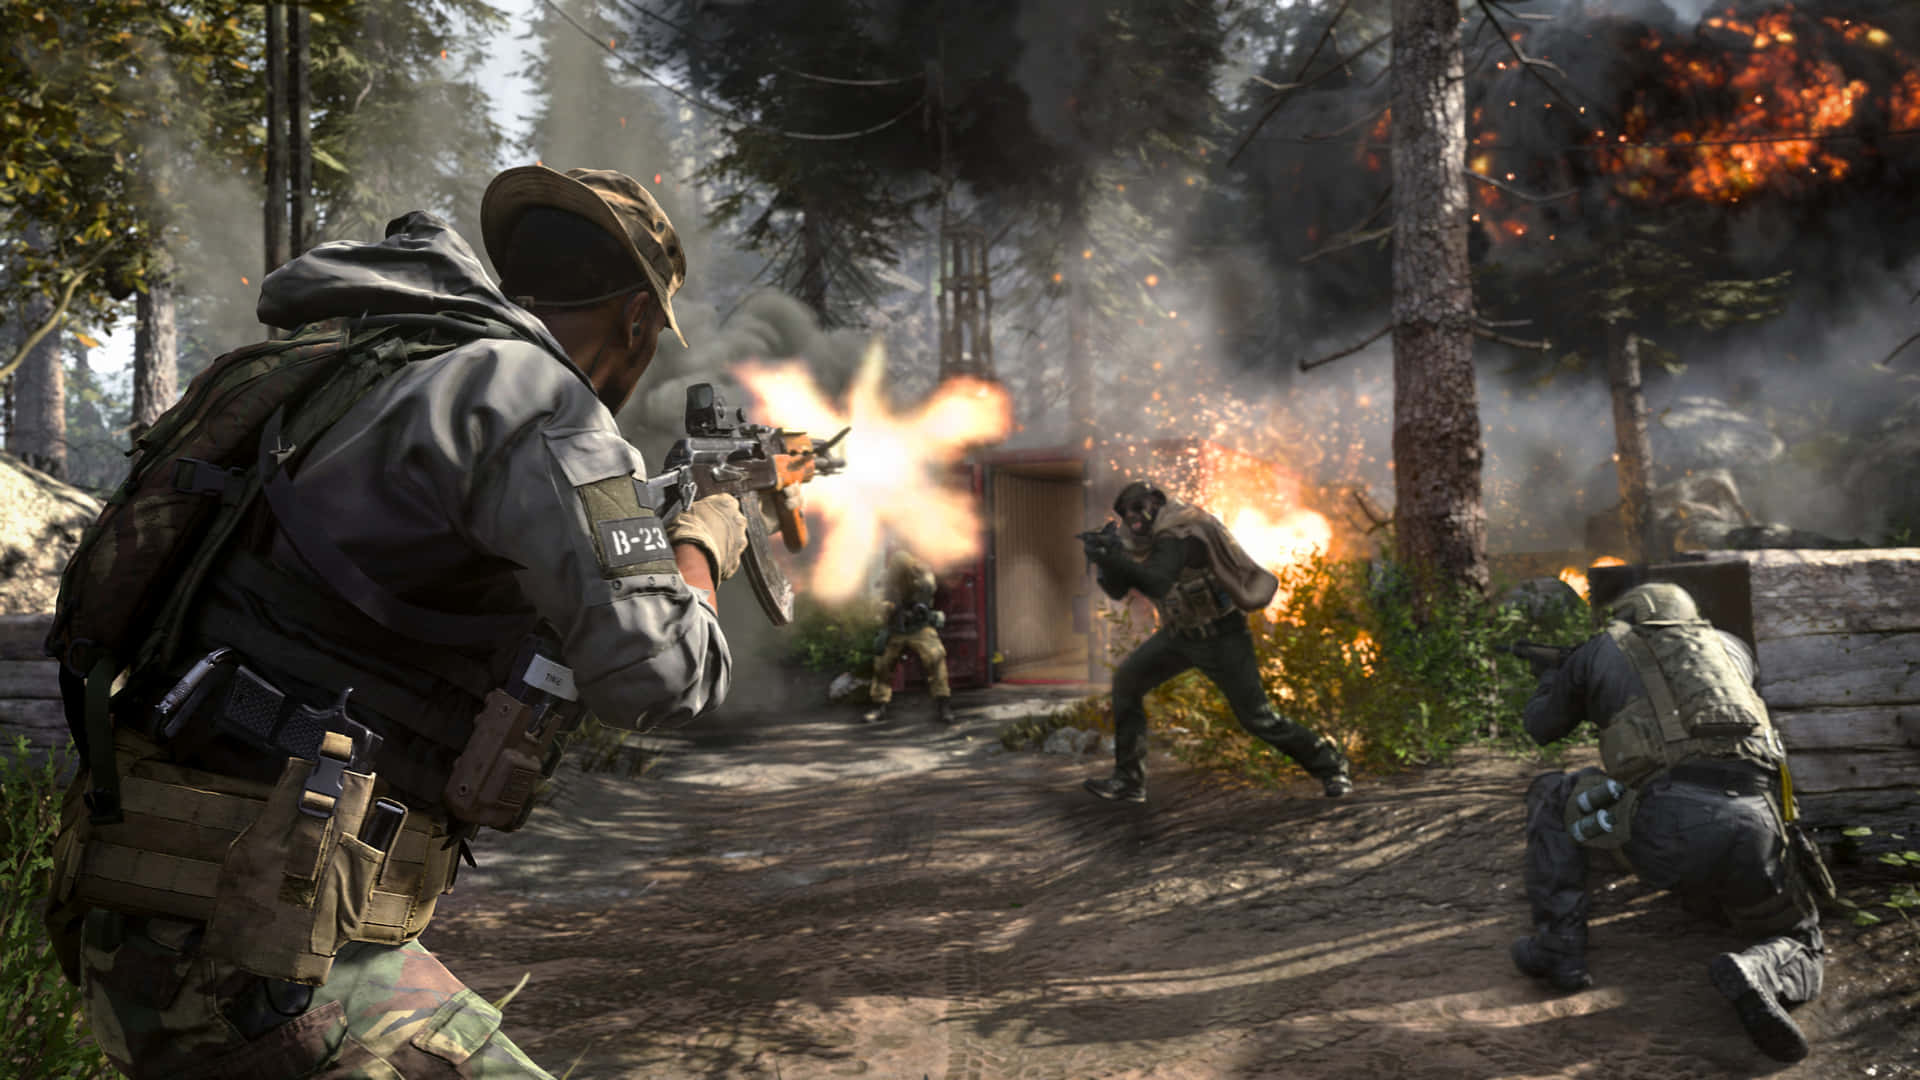 Plano De Fundo Do Call Of Duty Modern Warfare 1440p